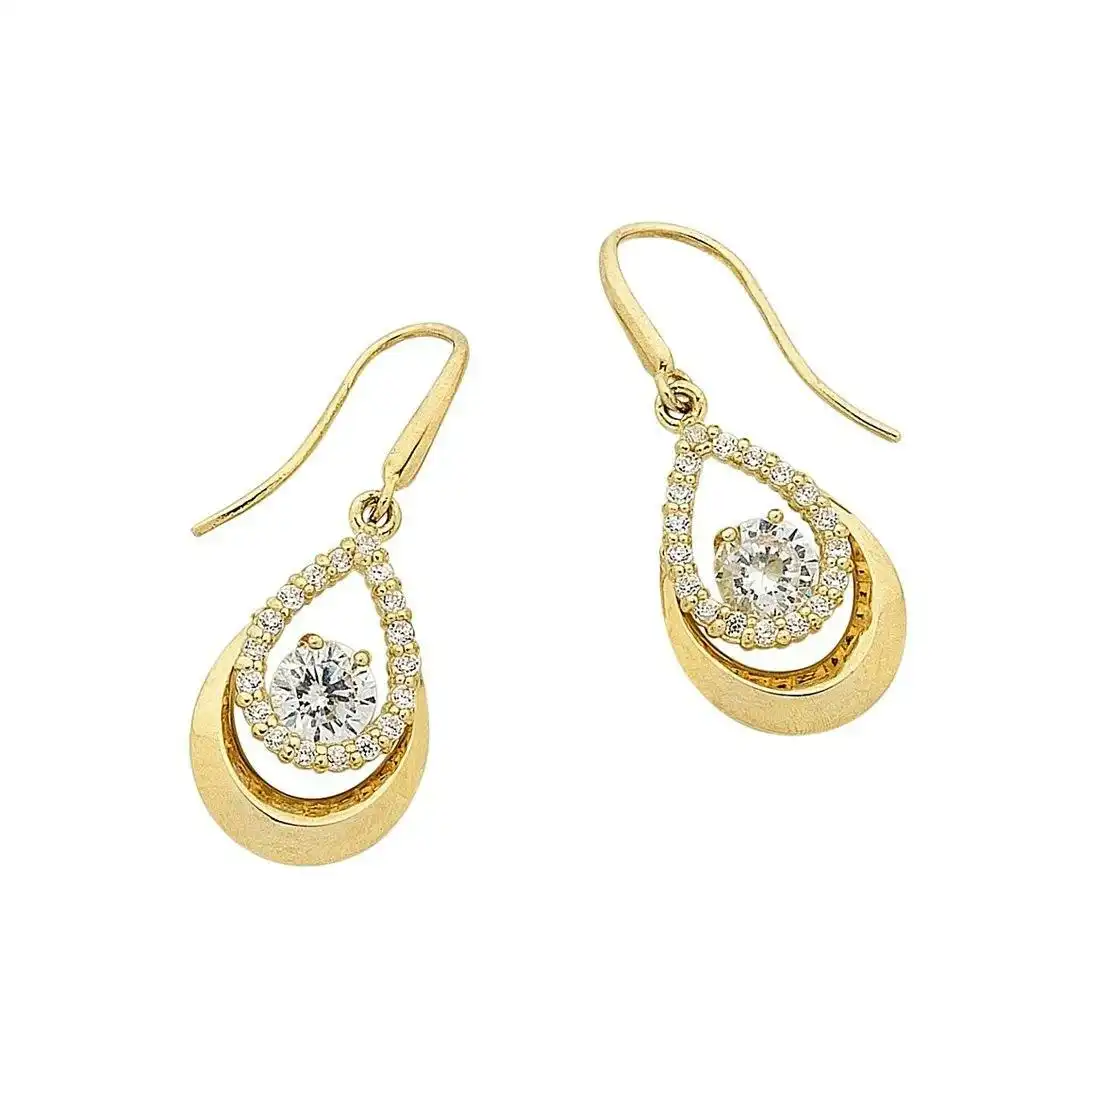 9ct Yellow Gold Pear Shaped Drop Earrings